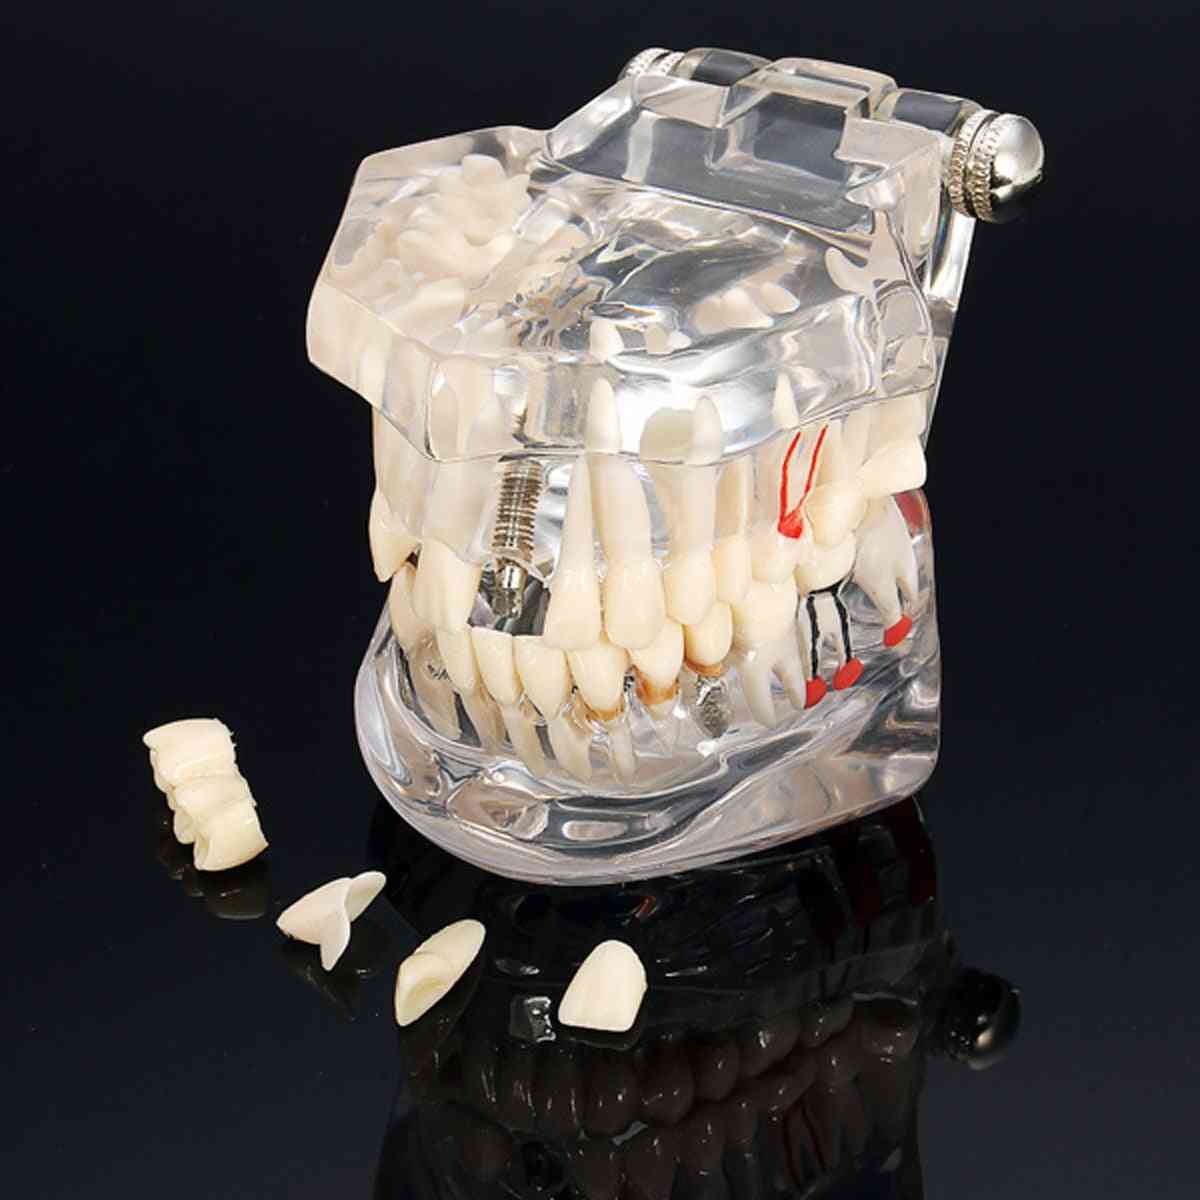 Implant Dental Disease Teeth Model With Restoration Bridge, Tooth Dentist For Medical Science,  Teaching Study Tool